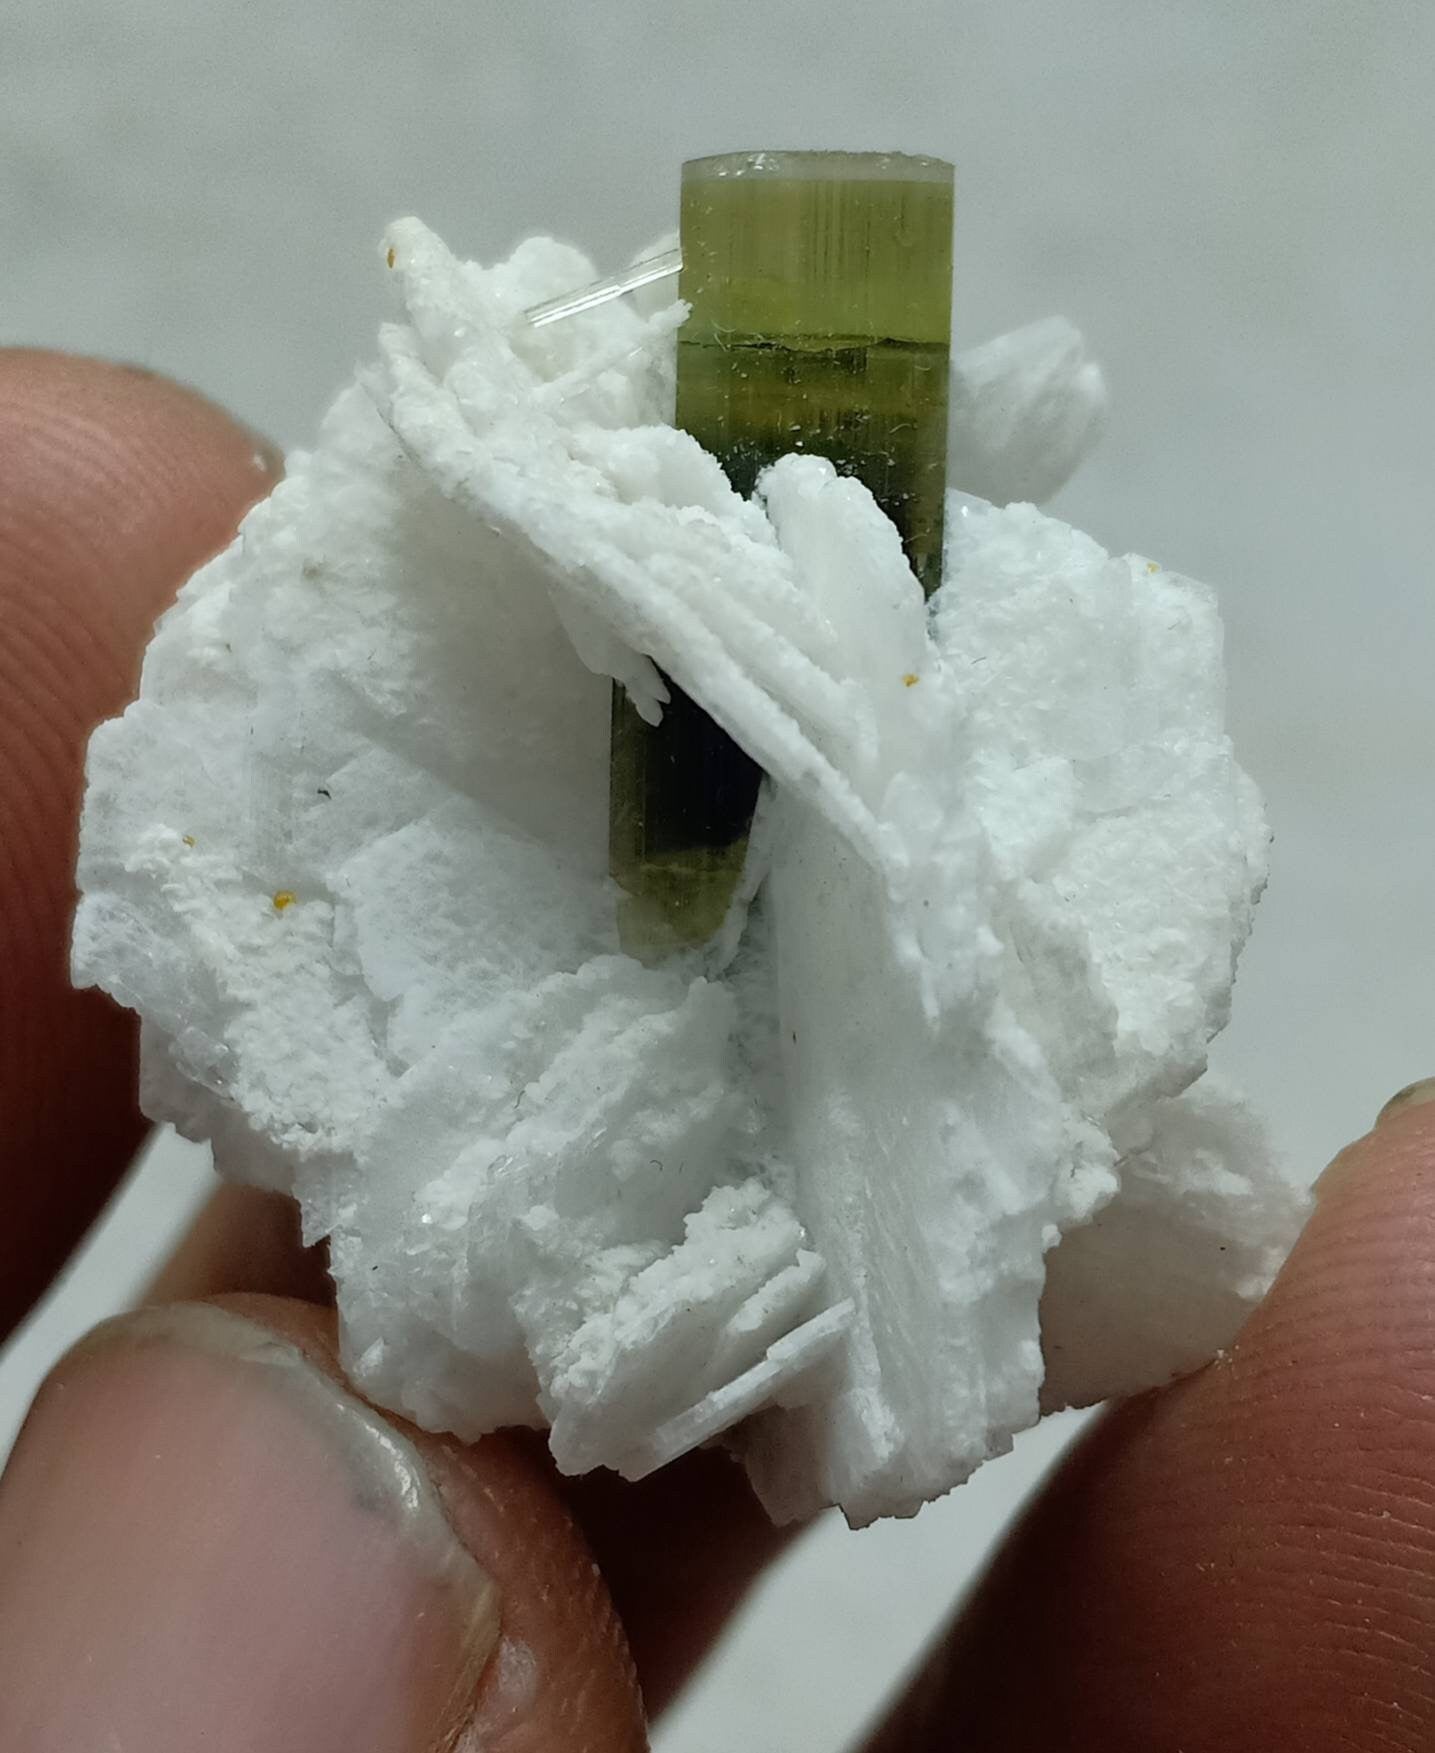 Green cap Tourmaline crystal with associated cleavelandite 10 grams